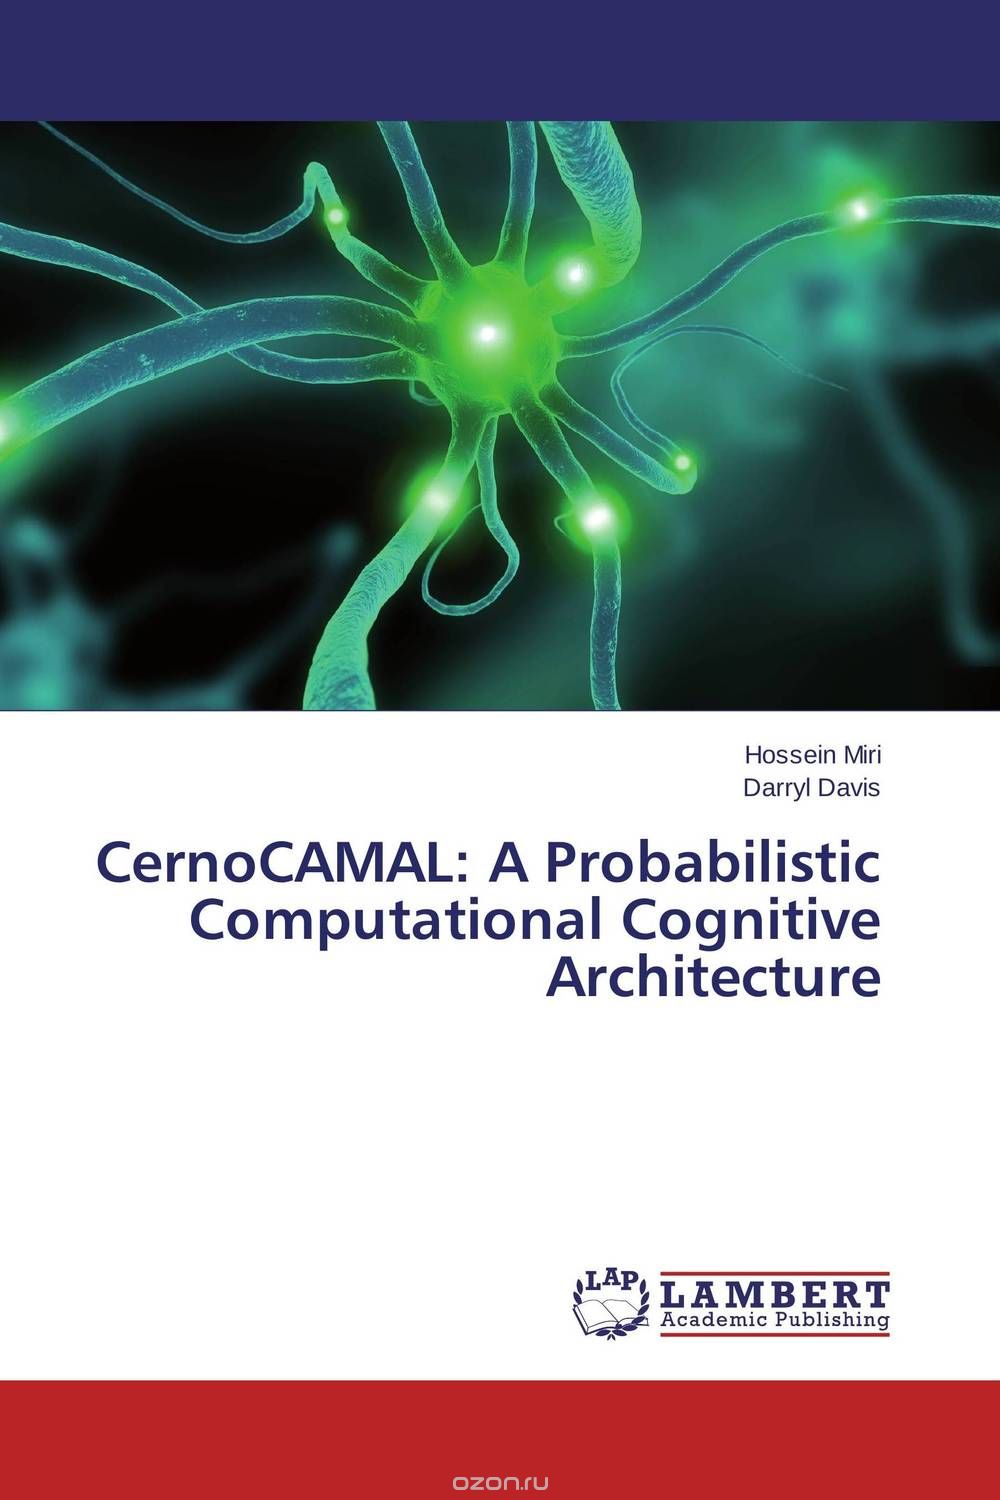 CernoCAMAL: A Probabilistic Computational Cognitive Architecture